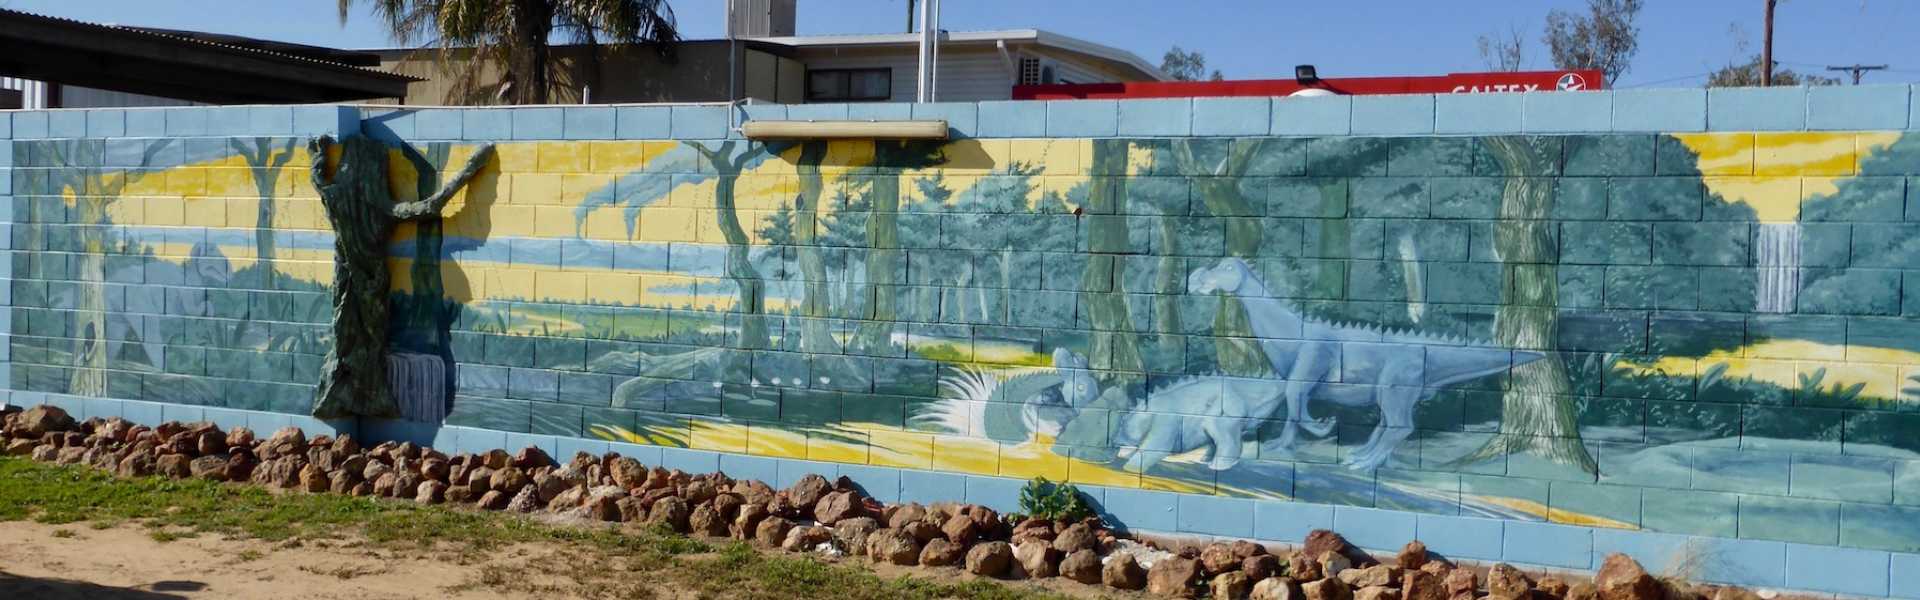 Kui Parks, Crocodile Caravan Park, Lightning Ridge, Wall Mural